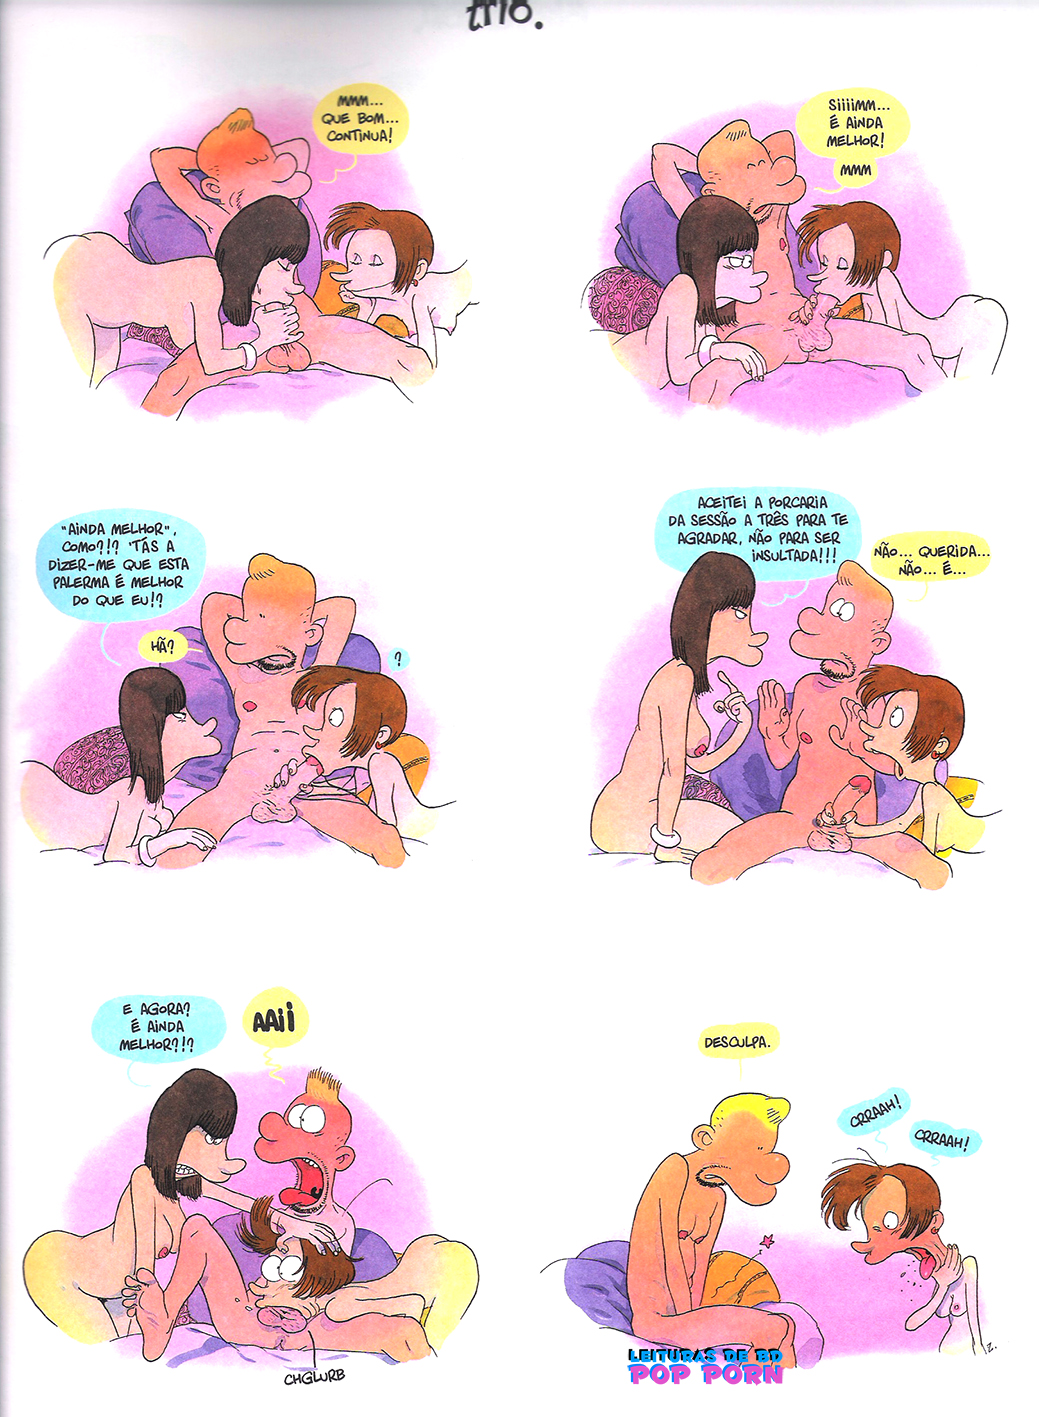 Zepporn - Leituras de BD PoP PorN: Sex Cartoon: Happy Sex por Zep